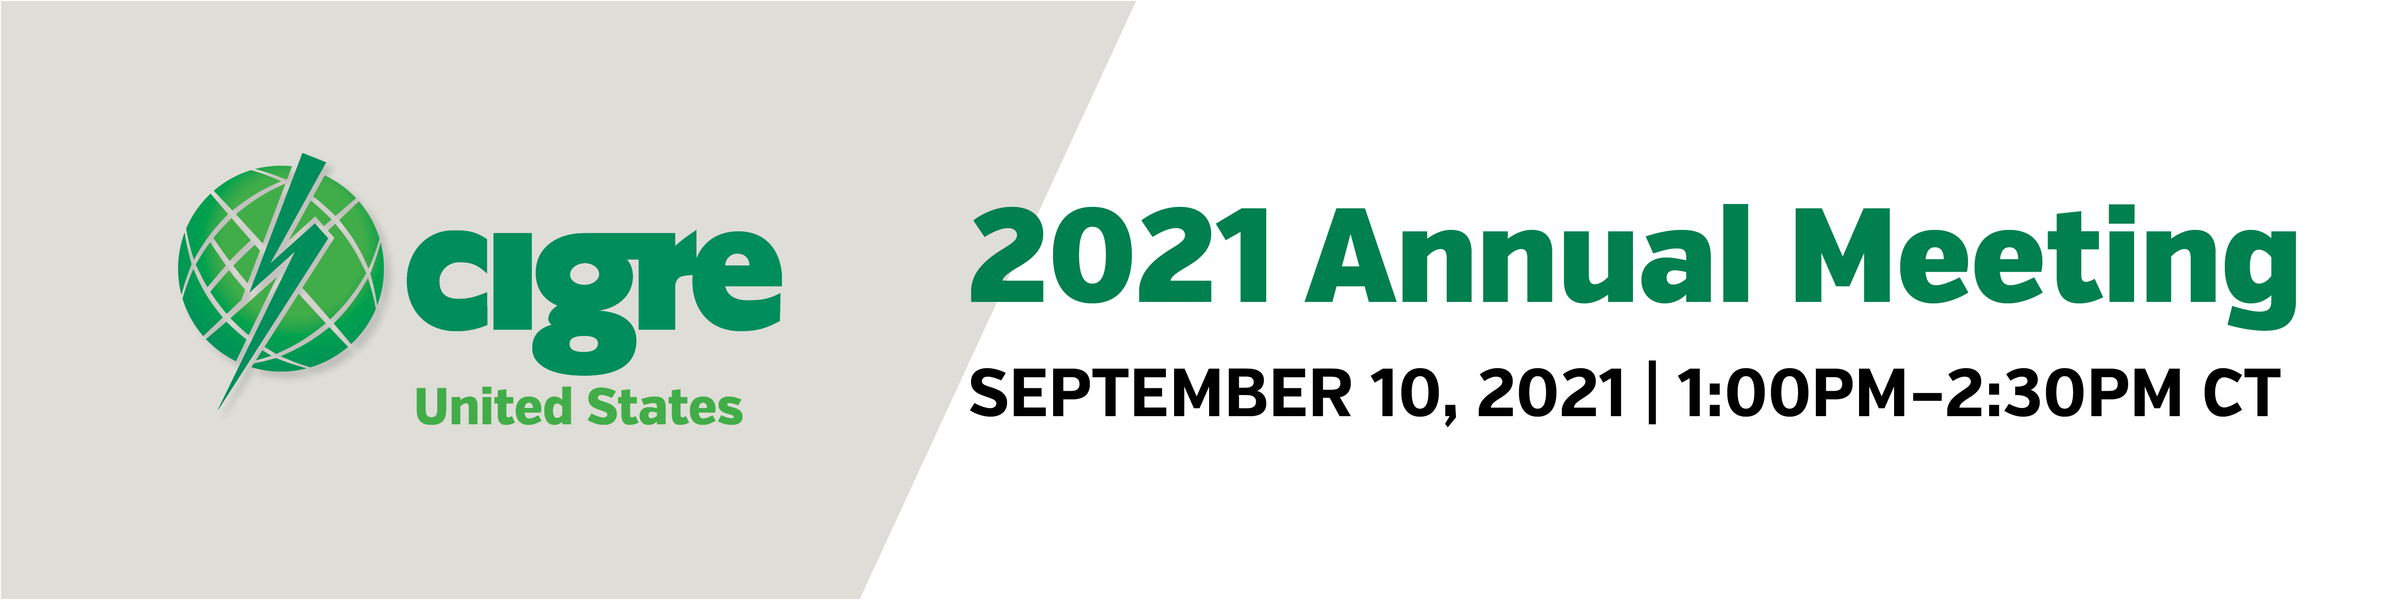 CIGRE USNC All Members Annual Meeting -2021 (Virtual) 